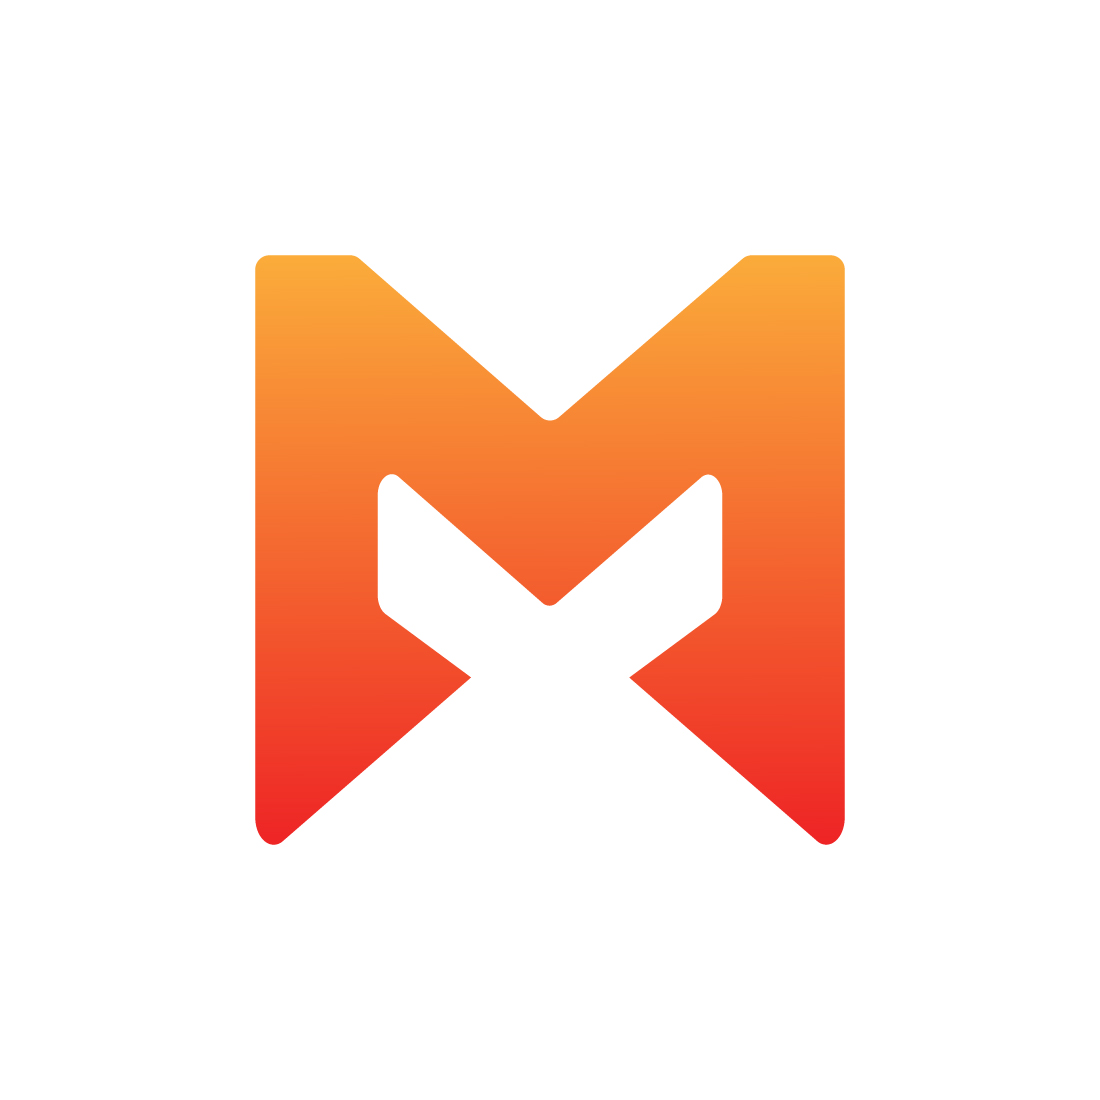 Creative Letter M logo design preview image.